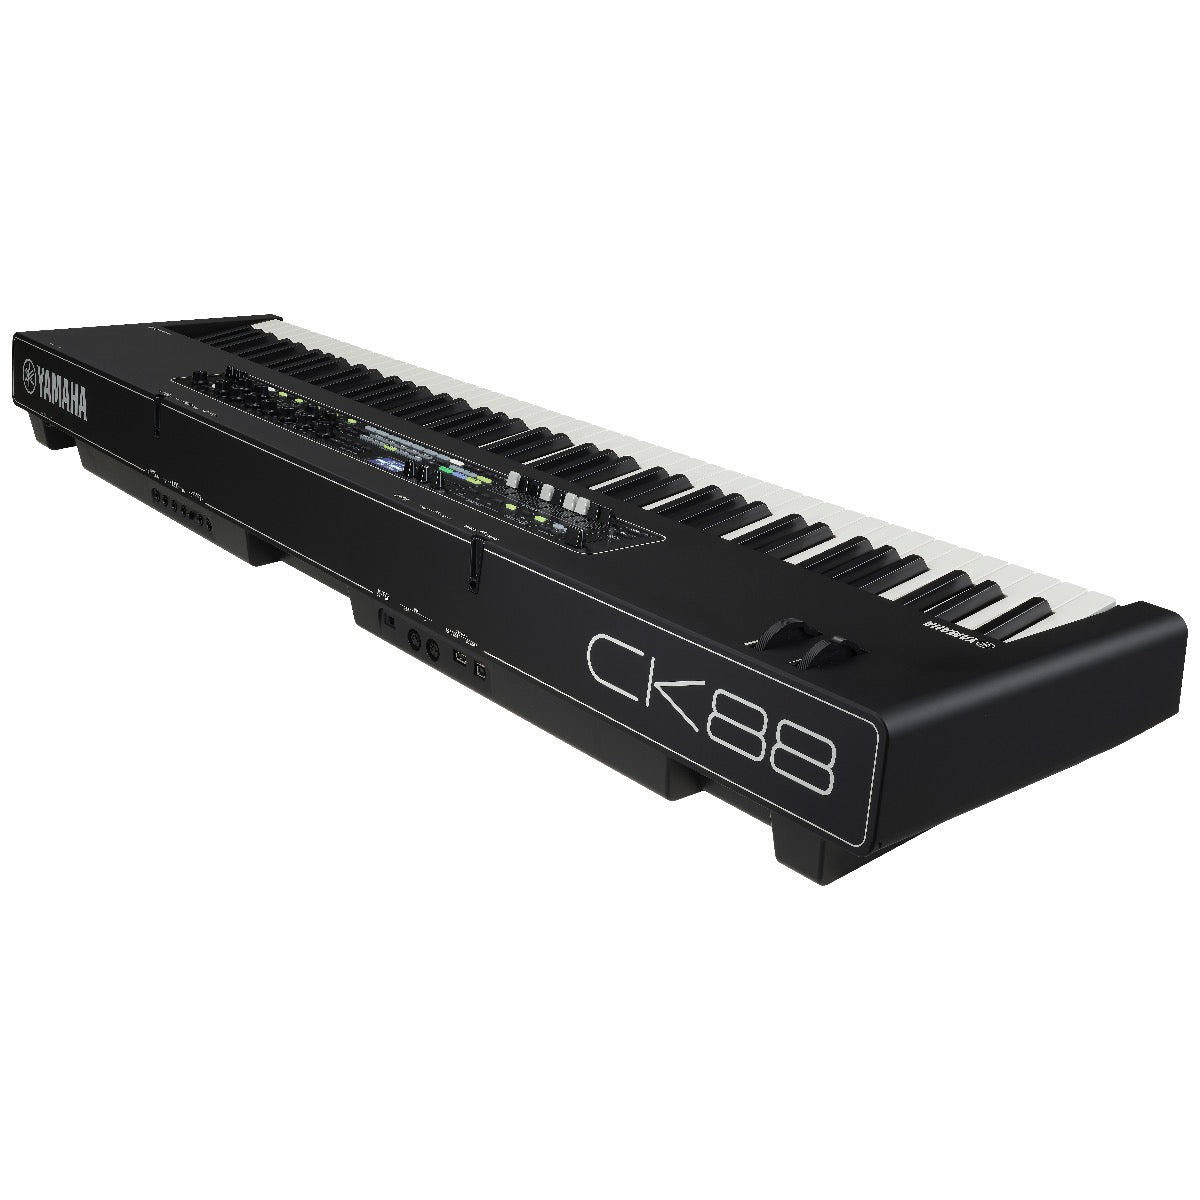 Yamaha CK88 Stage Keyboard - View 114